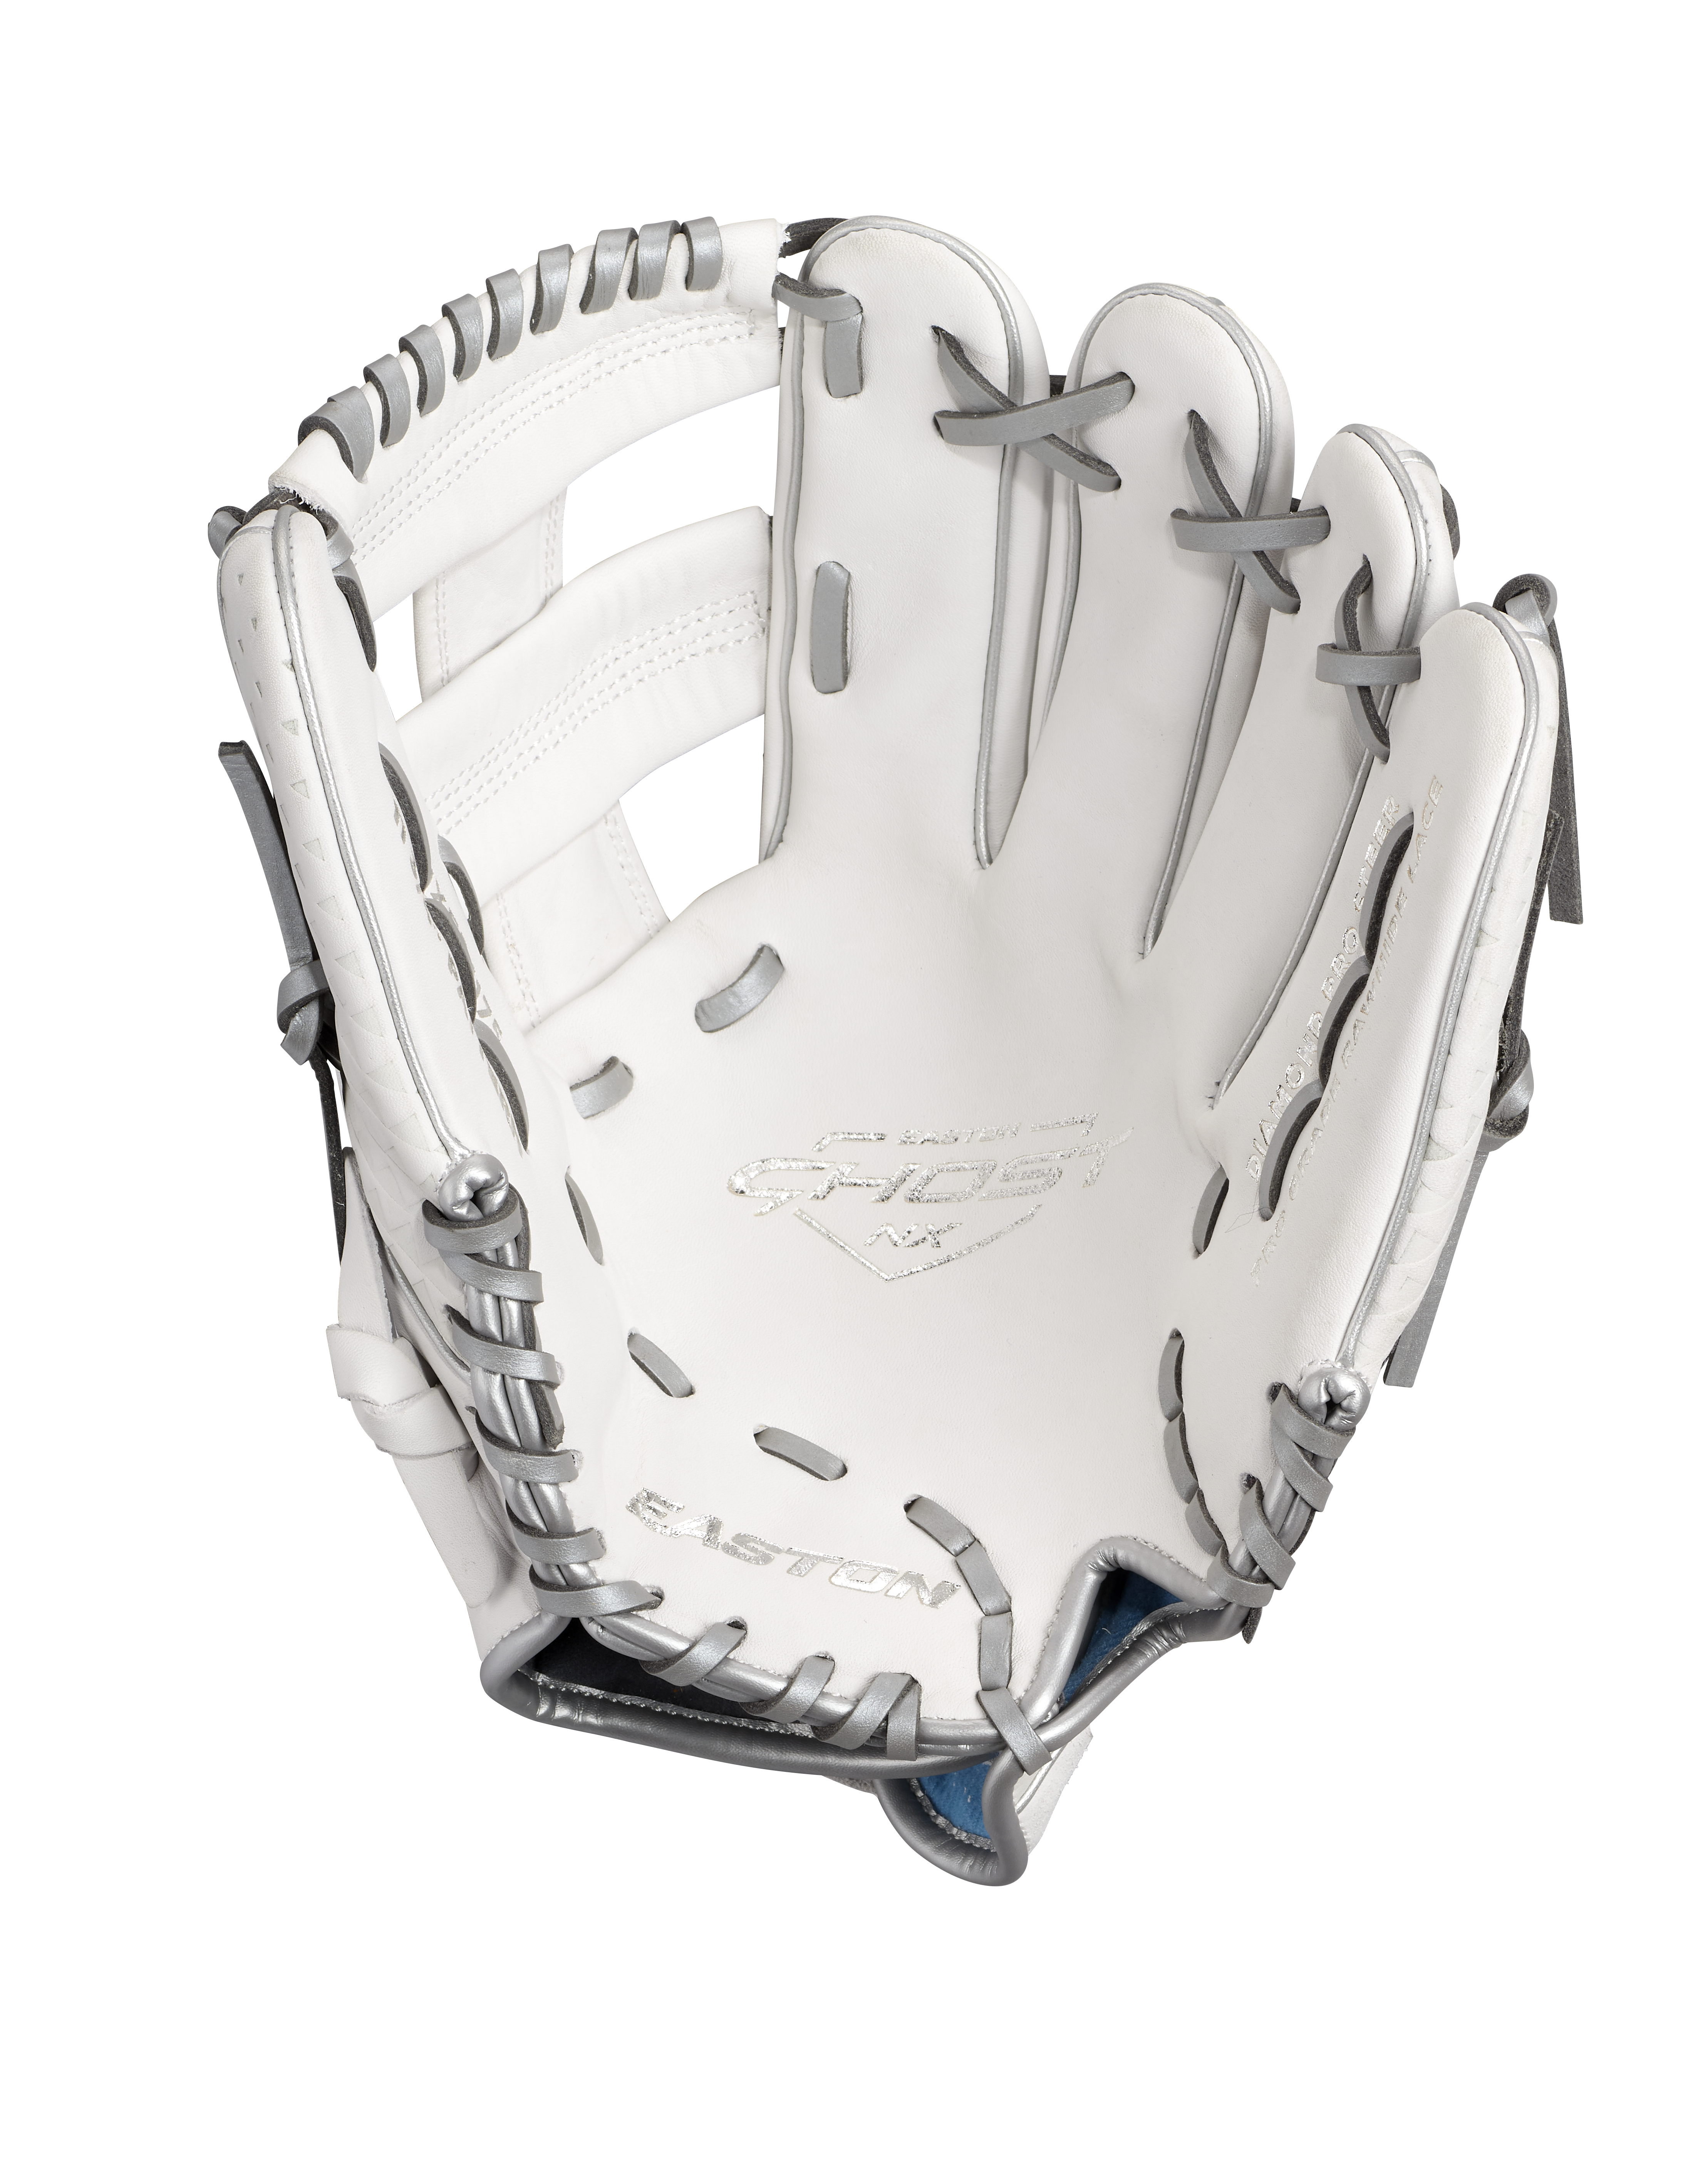 Easton Ghost NX FP Series 12" Softball Glove